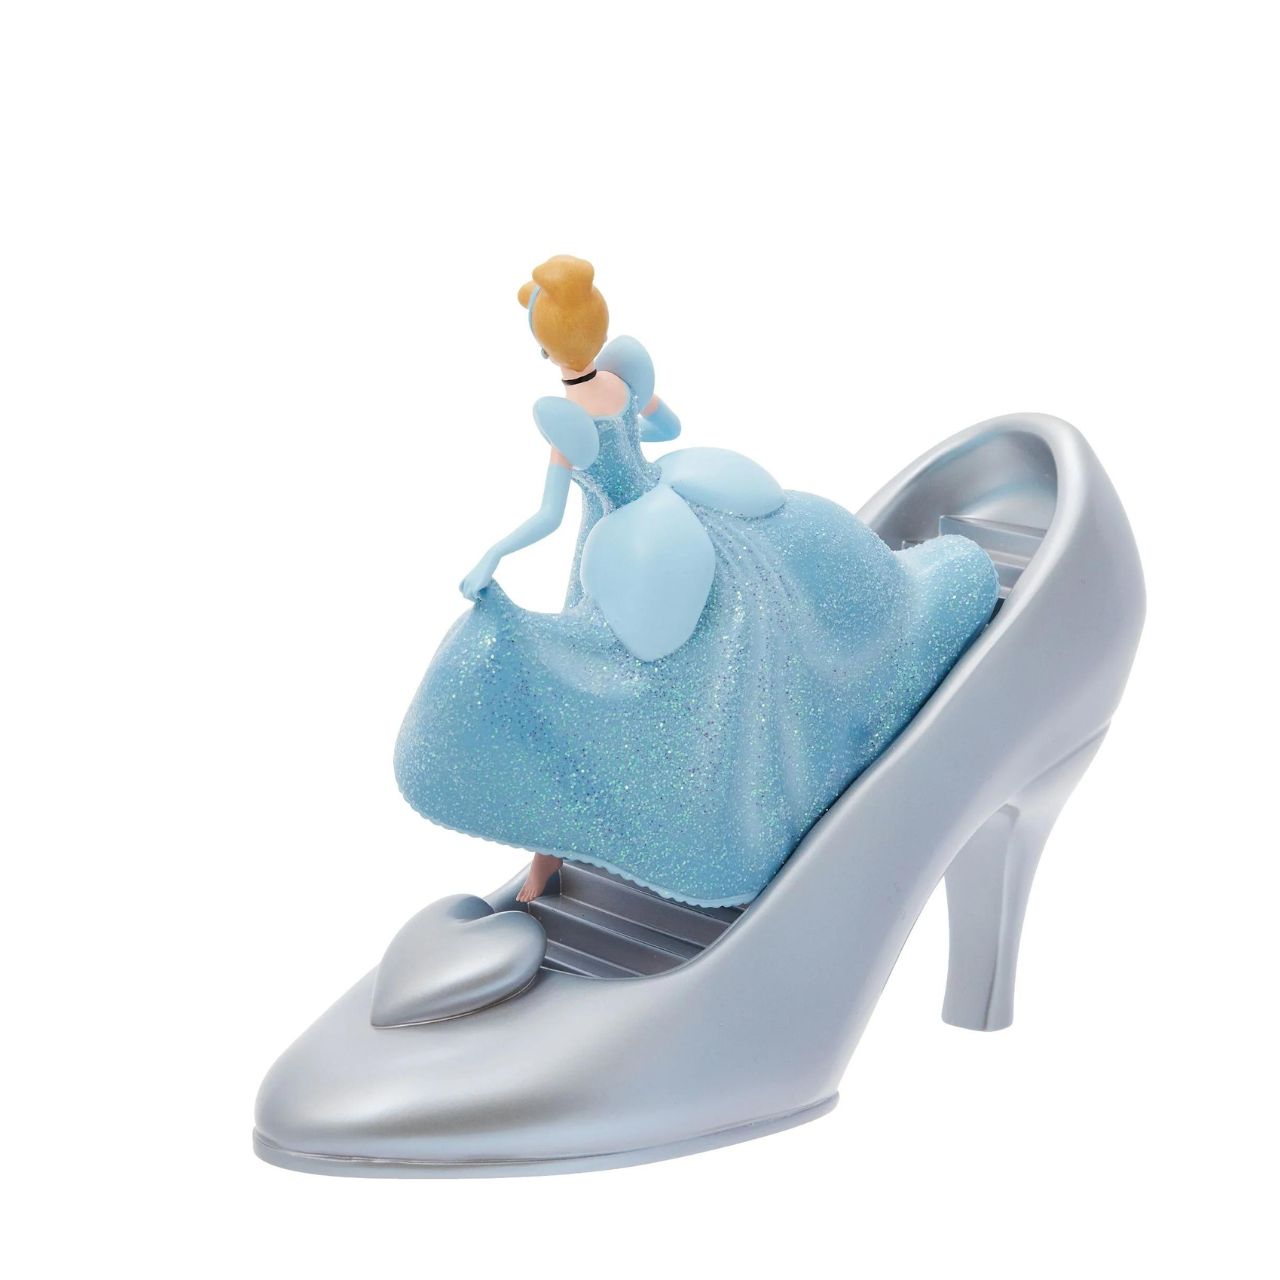 Disney 100th Anniversary Cinderella With Glass Slipper Decorative Figure  Mark the century milestone of Disney with this exquisite Disney Showcase Cinderella Icon Figurine. Celebrate the 100th anniversary of Disney with this wonderful Cinderella Figurine from Disney Showcase.